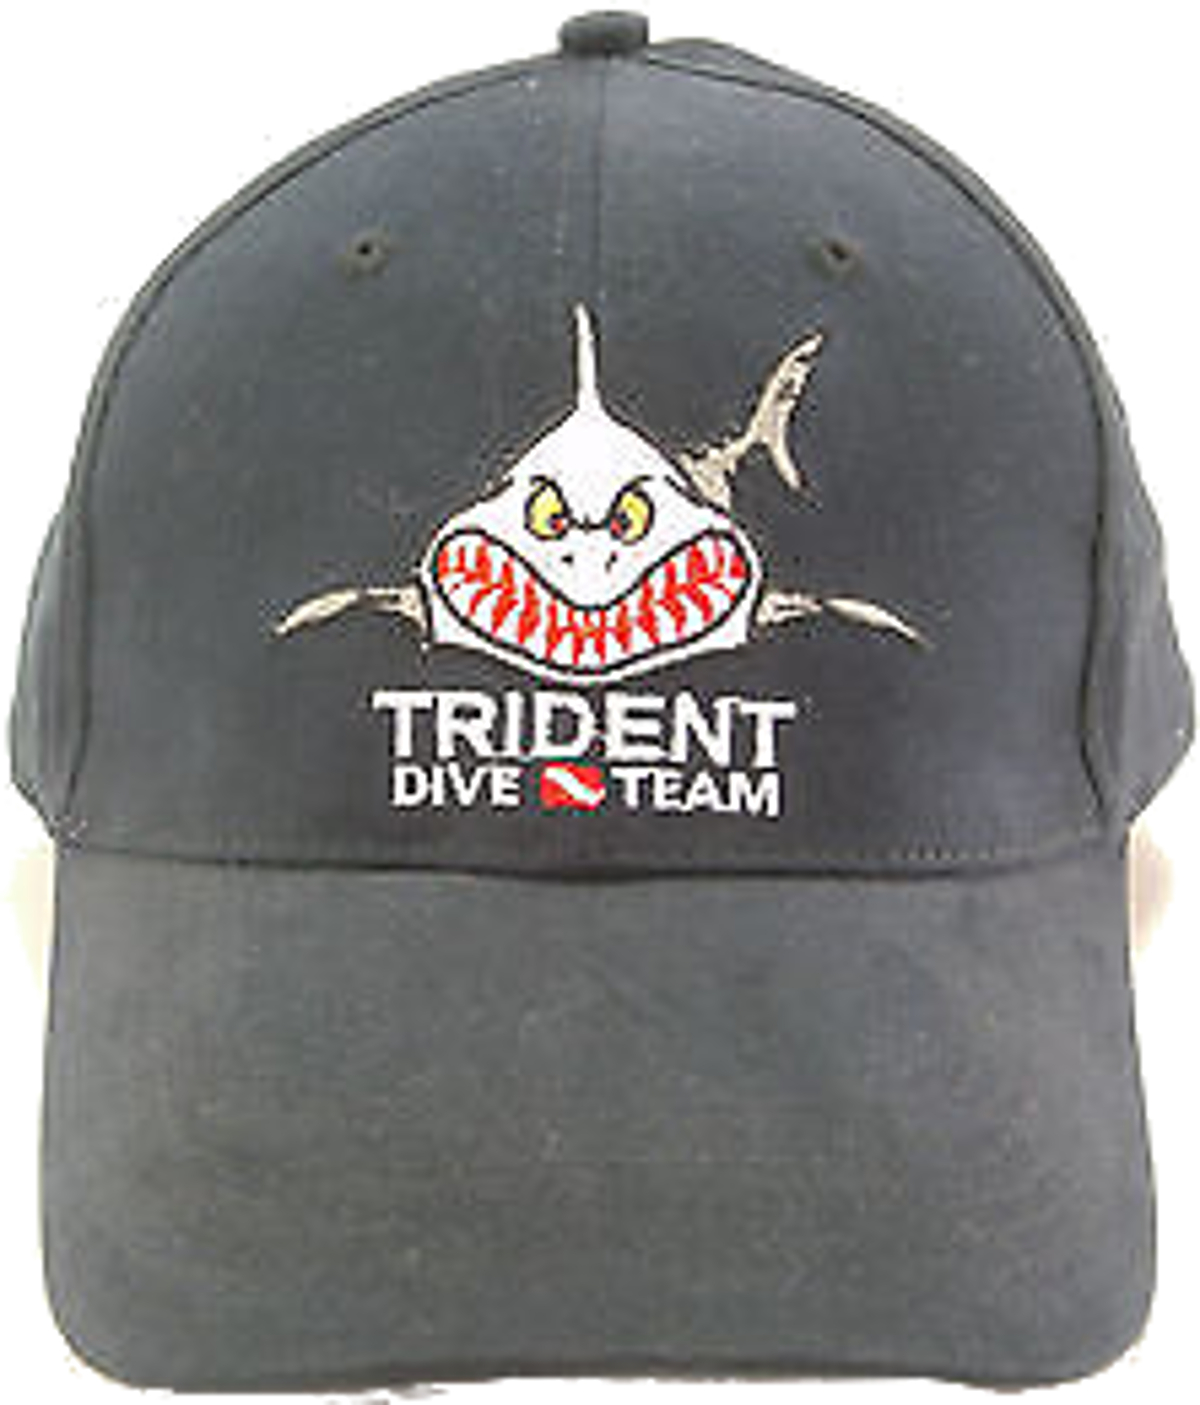 Trident Dive Team Black Baseball Cap